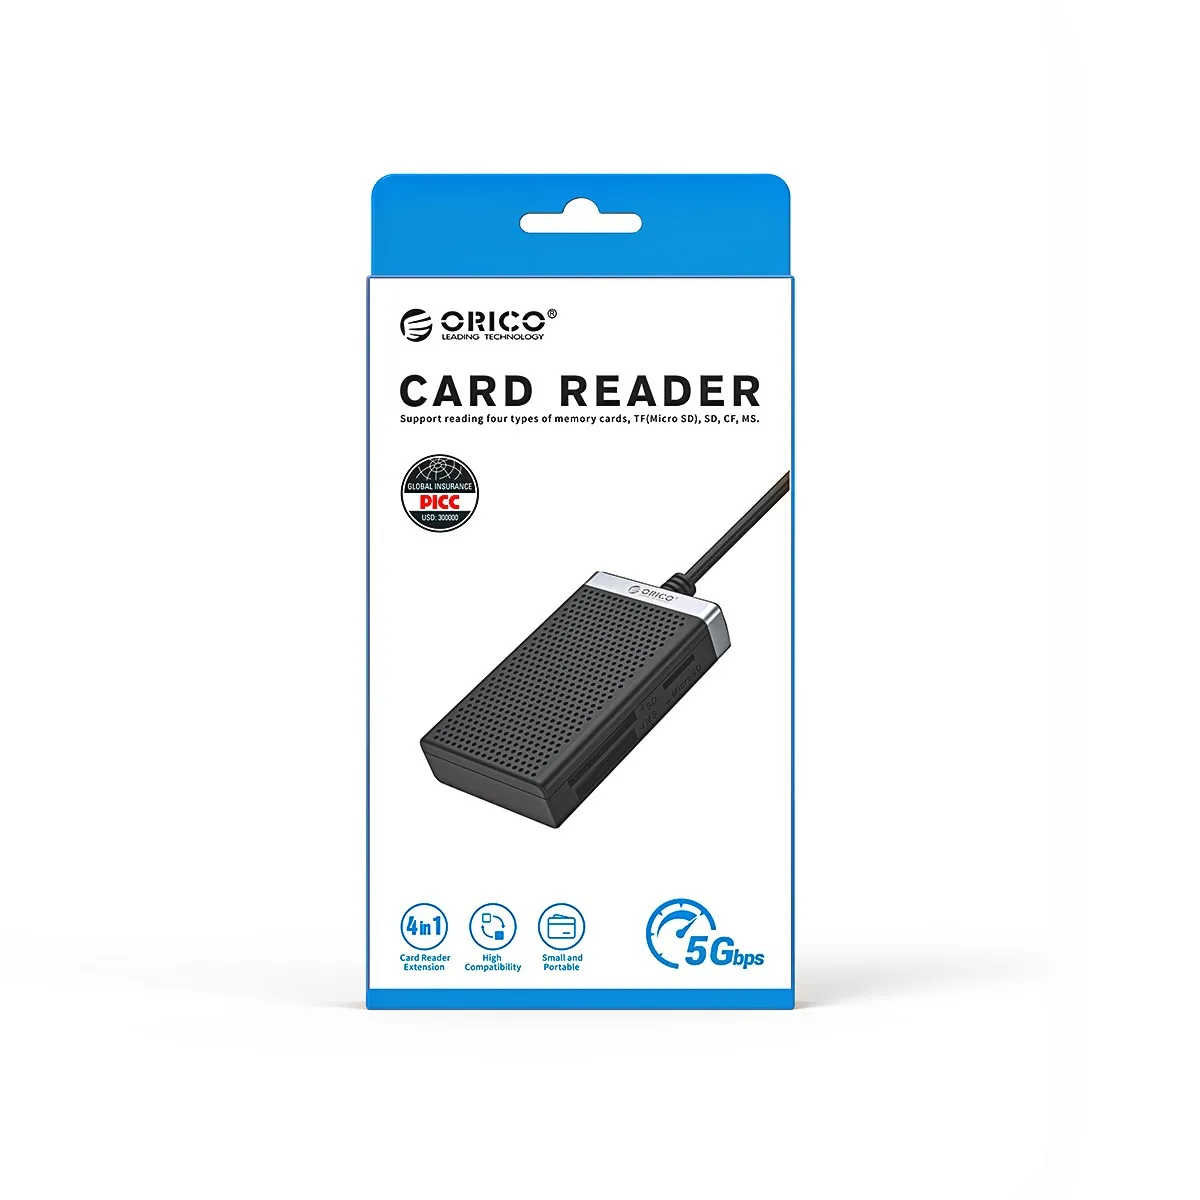 USB C USB3.0 Multi Card Reader Hub, SD/XD/TF/CF/MS Card Slot with 3 USB3.0,  8 in 2 Memory Card Reader/Adapter/Hub for SD SDXC SDHC CF CFI XD MS TF